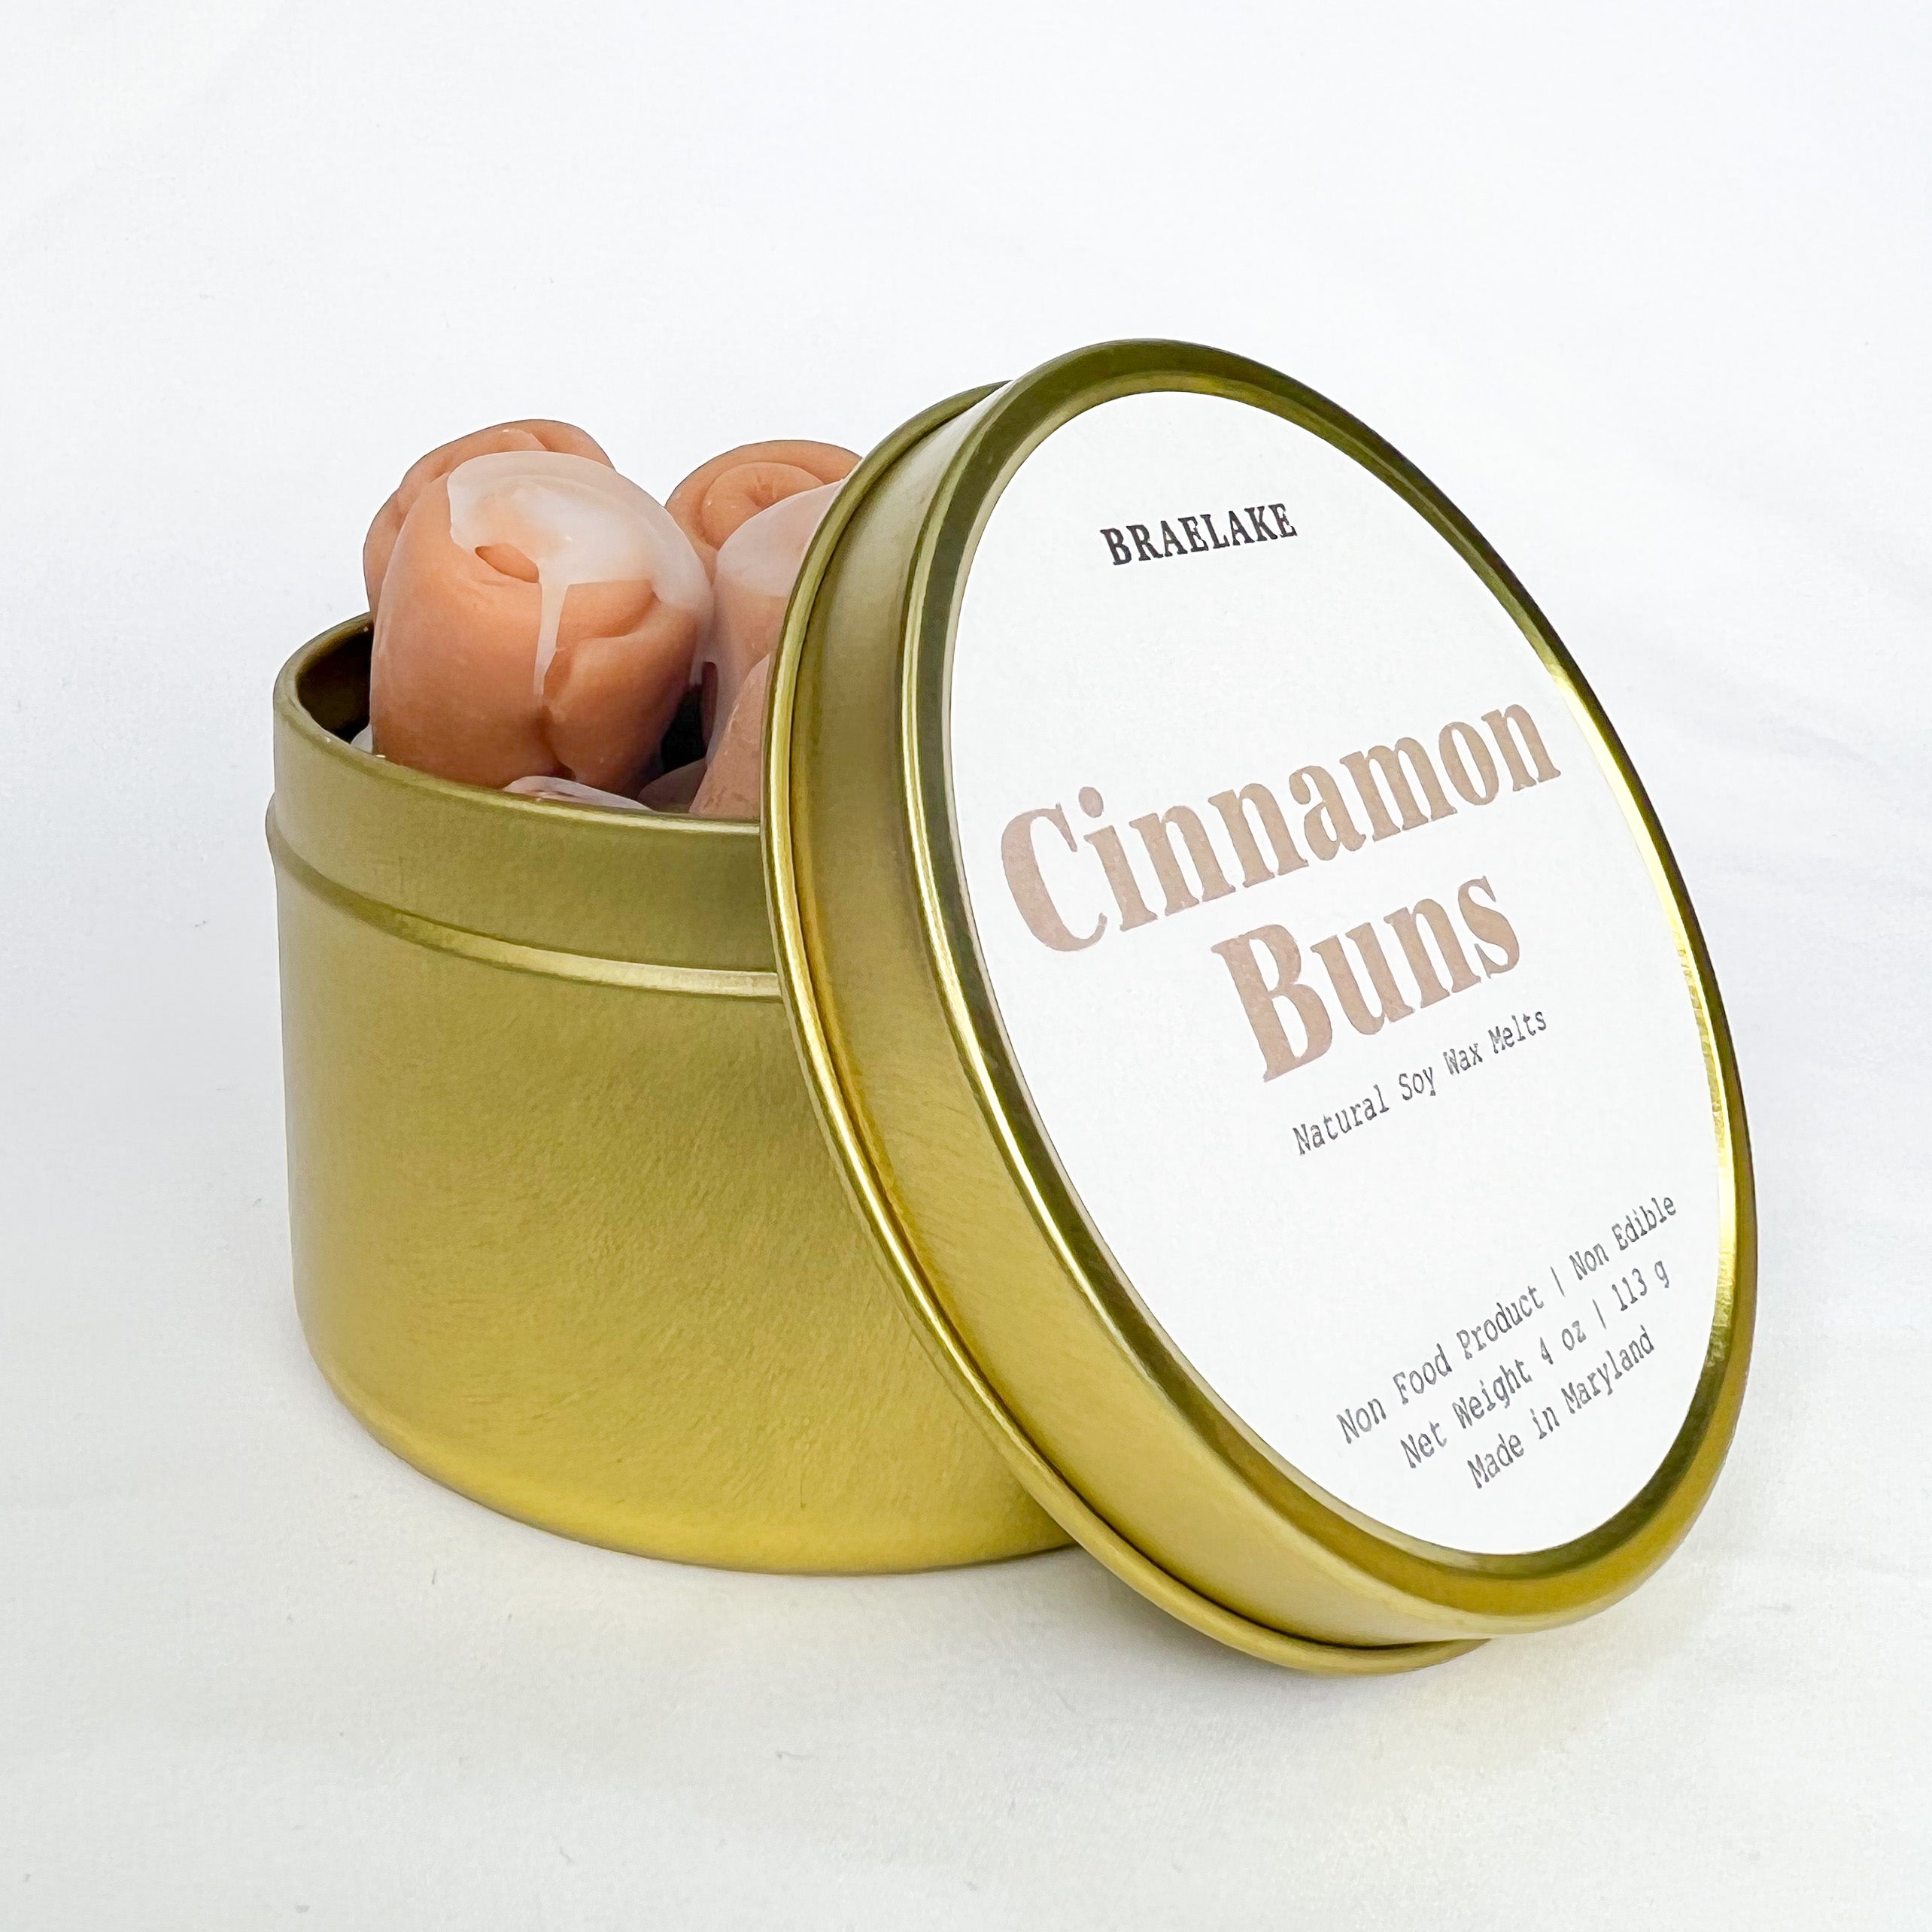 Cinnamon Bun Wax Melts